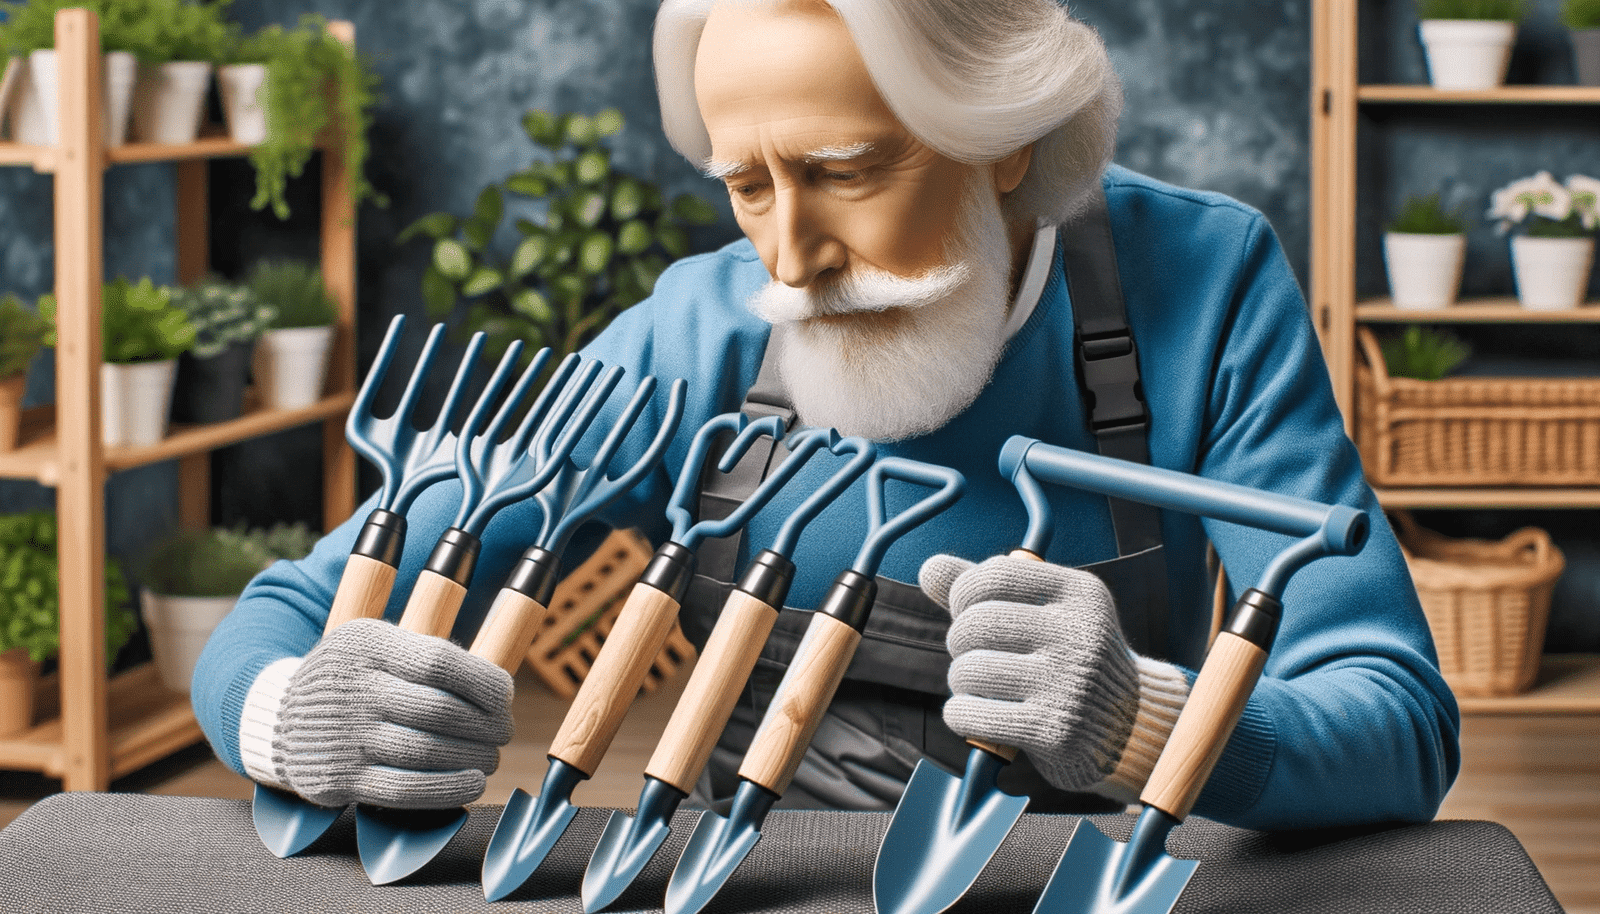 Gardening Tools For Seniors Guide